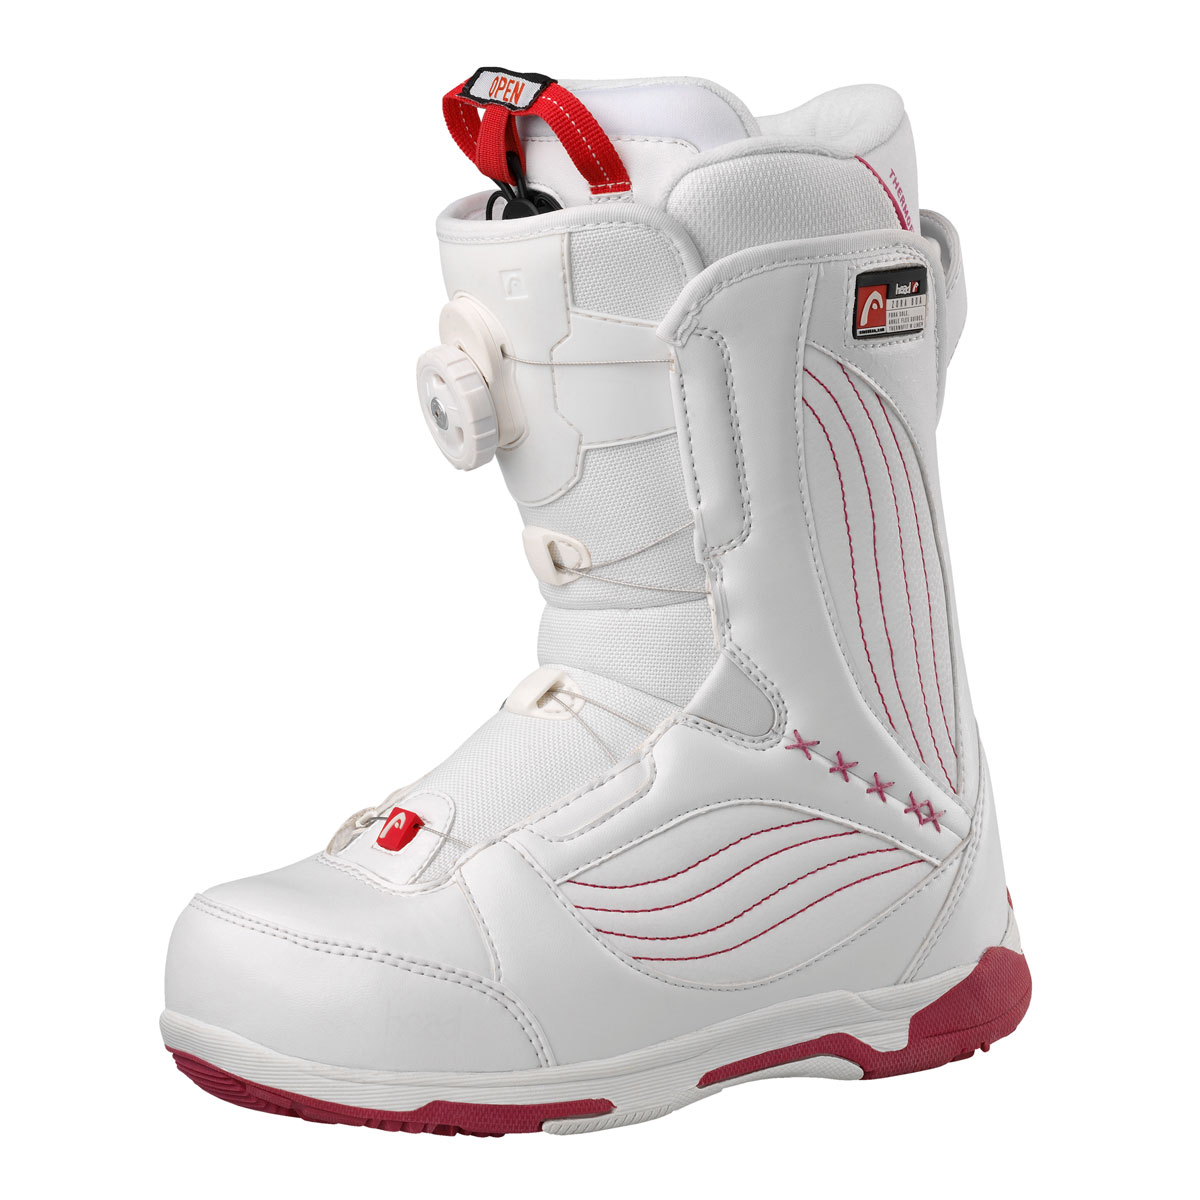 Zora white Boa - Women’s snowboard boots